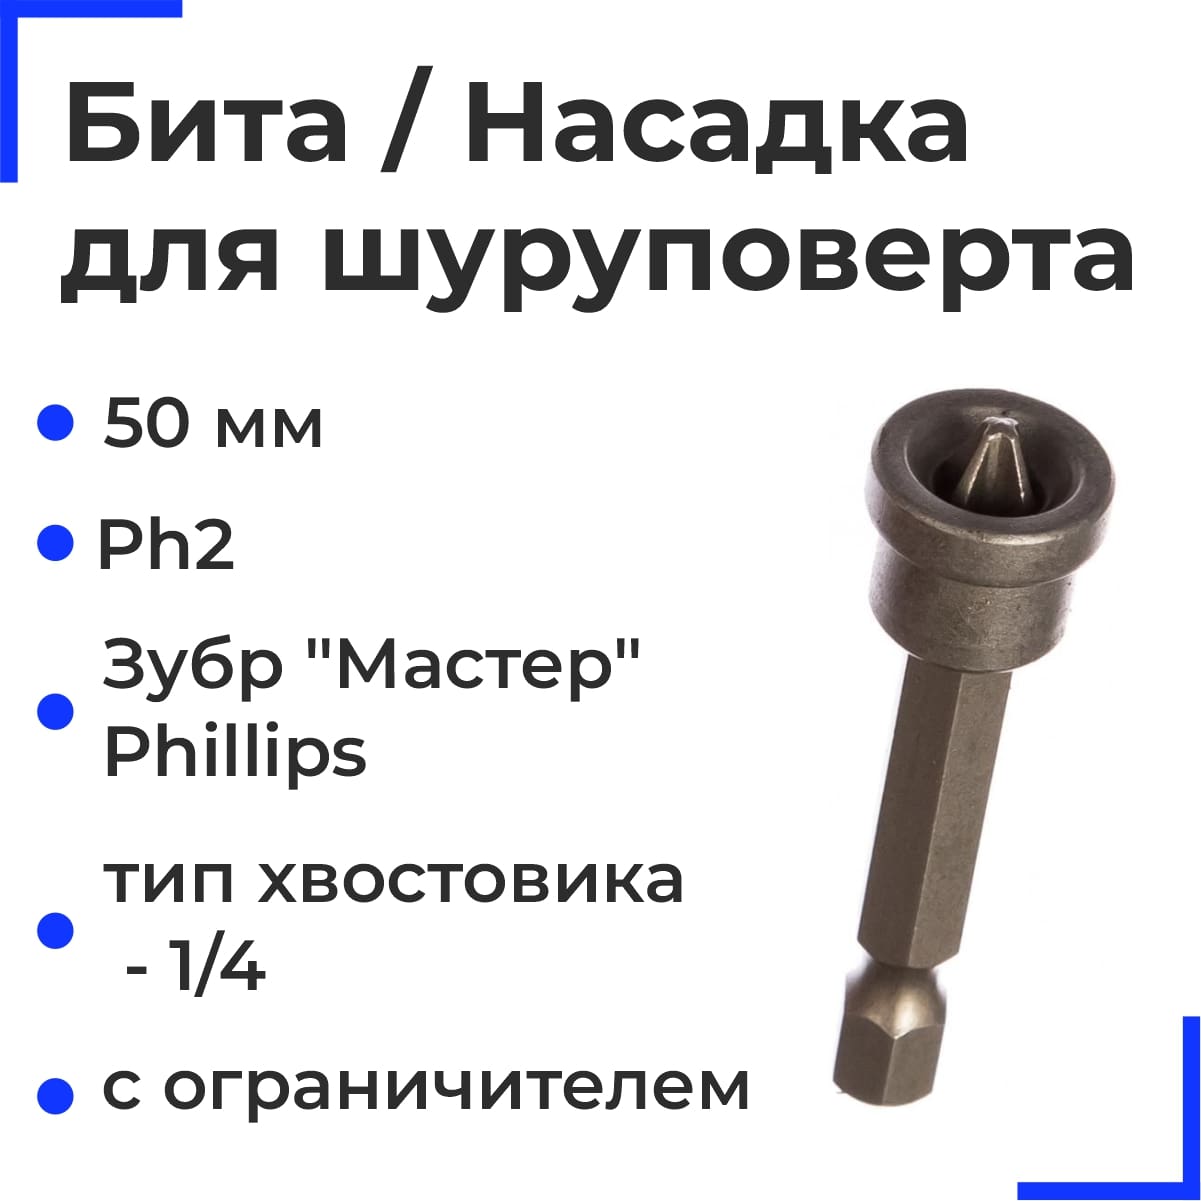 Биты Зубр "Мастер" Phillips, c ограничителем, 50 мм, тип хвостовика Е 1/4", РН2, 50мм, 10шт